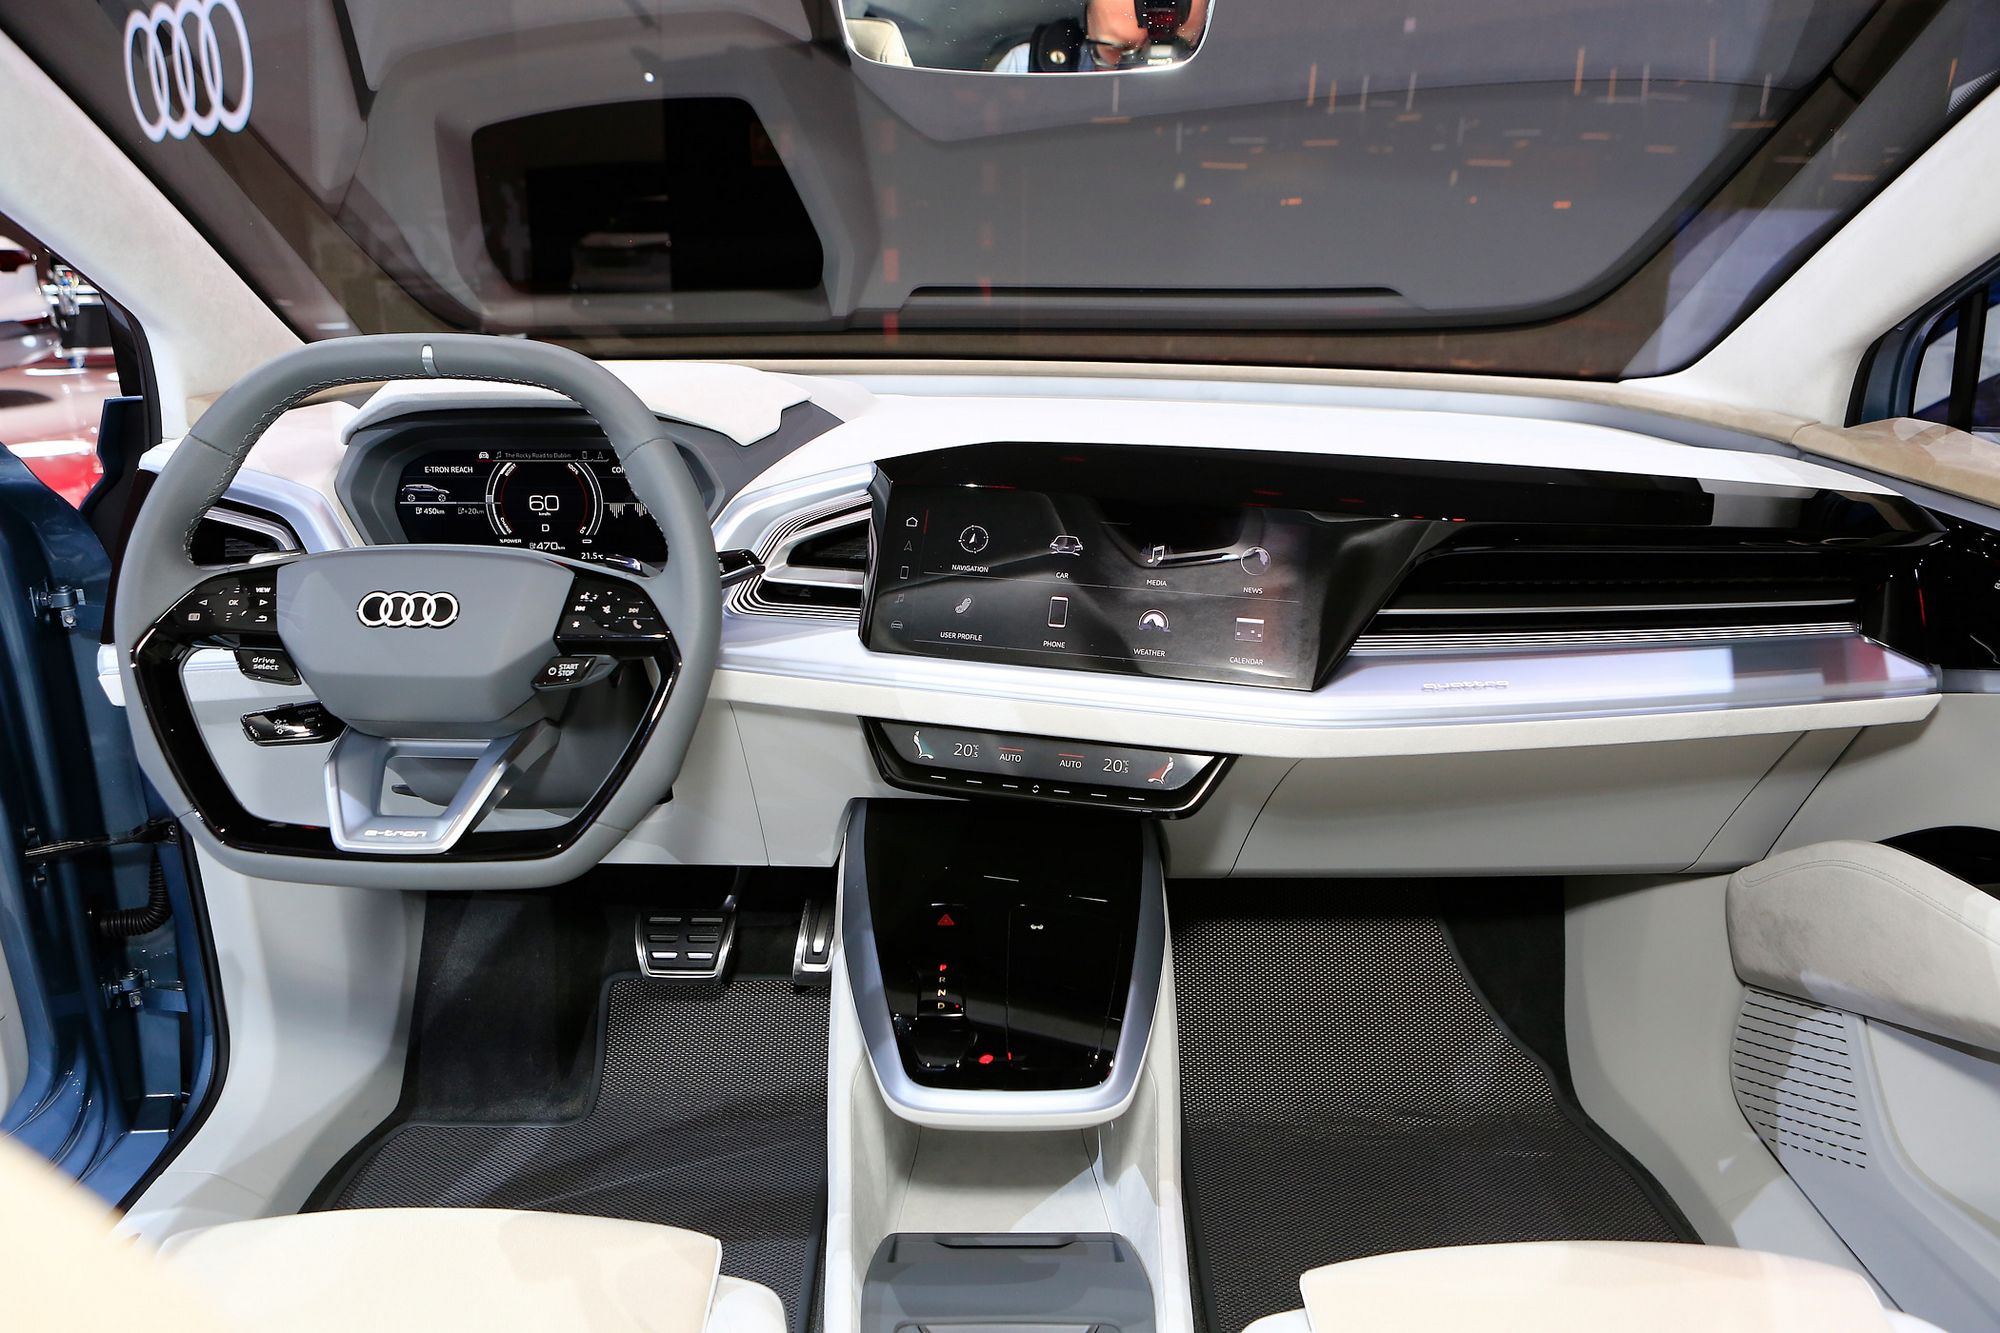 Audi Q4 Concept 100% eléctrico. Crossover o SUV compacto